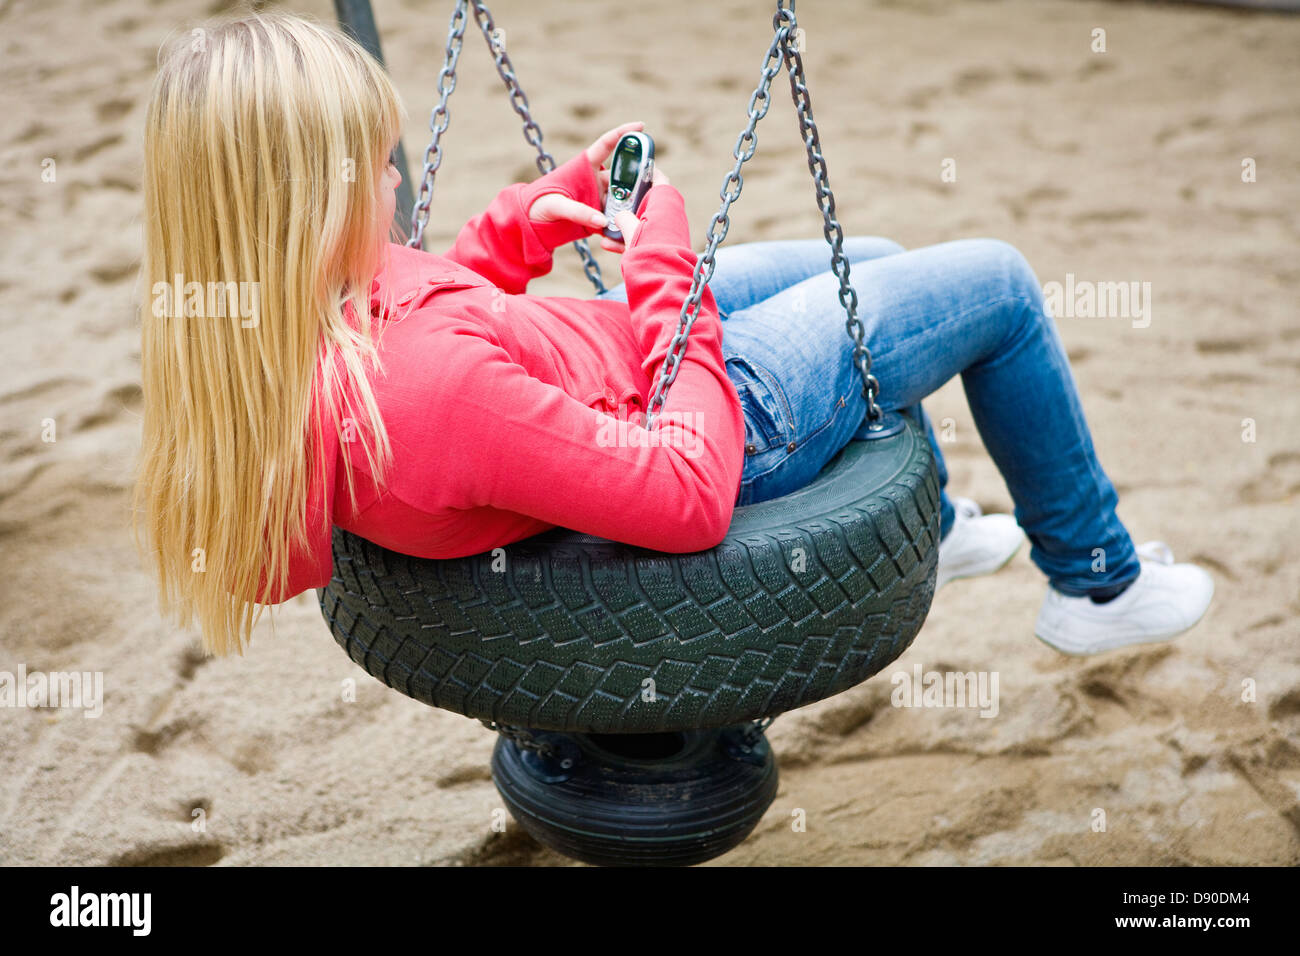 Girl using mobile phone on swing in park Stock Photo